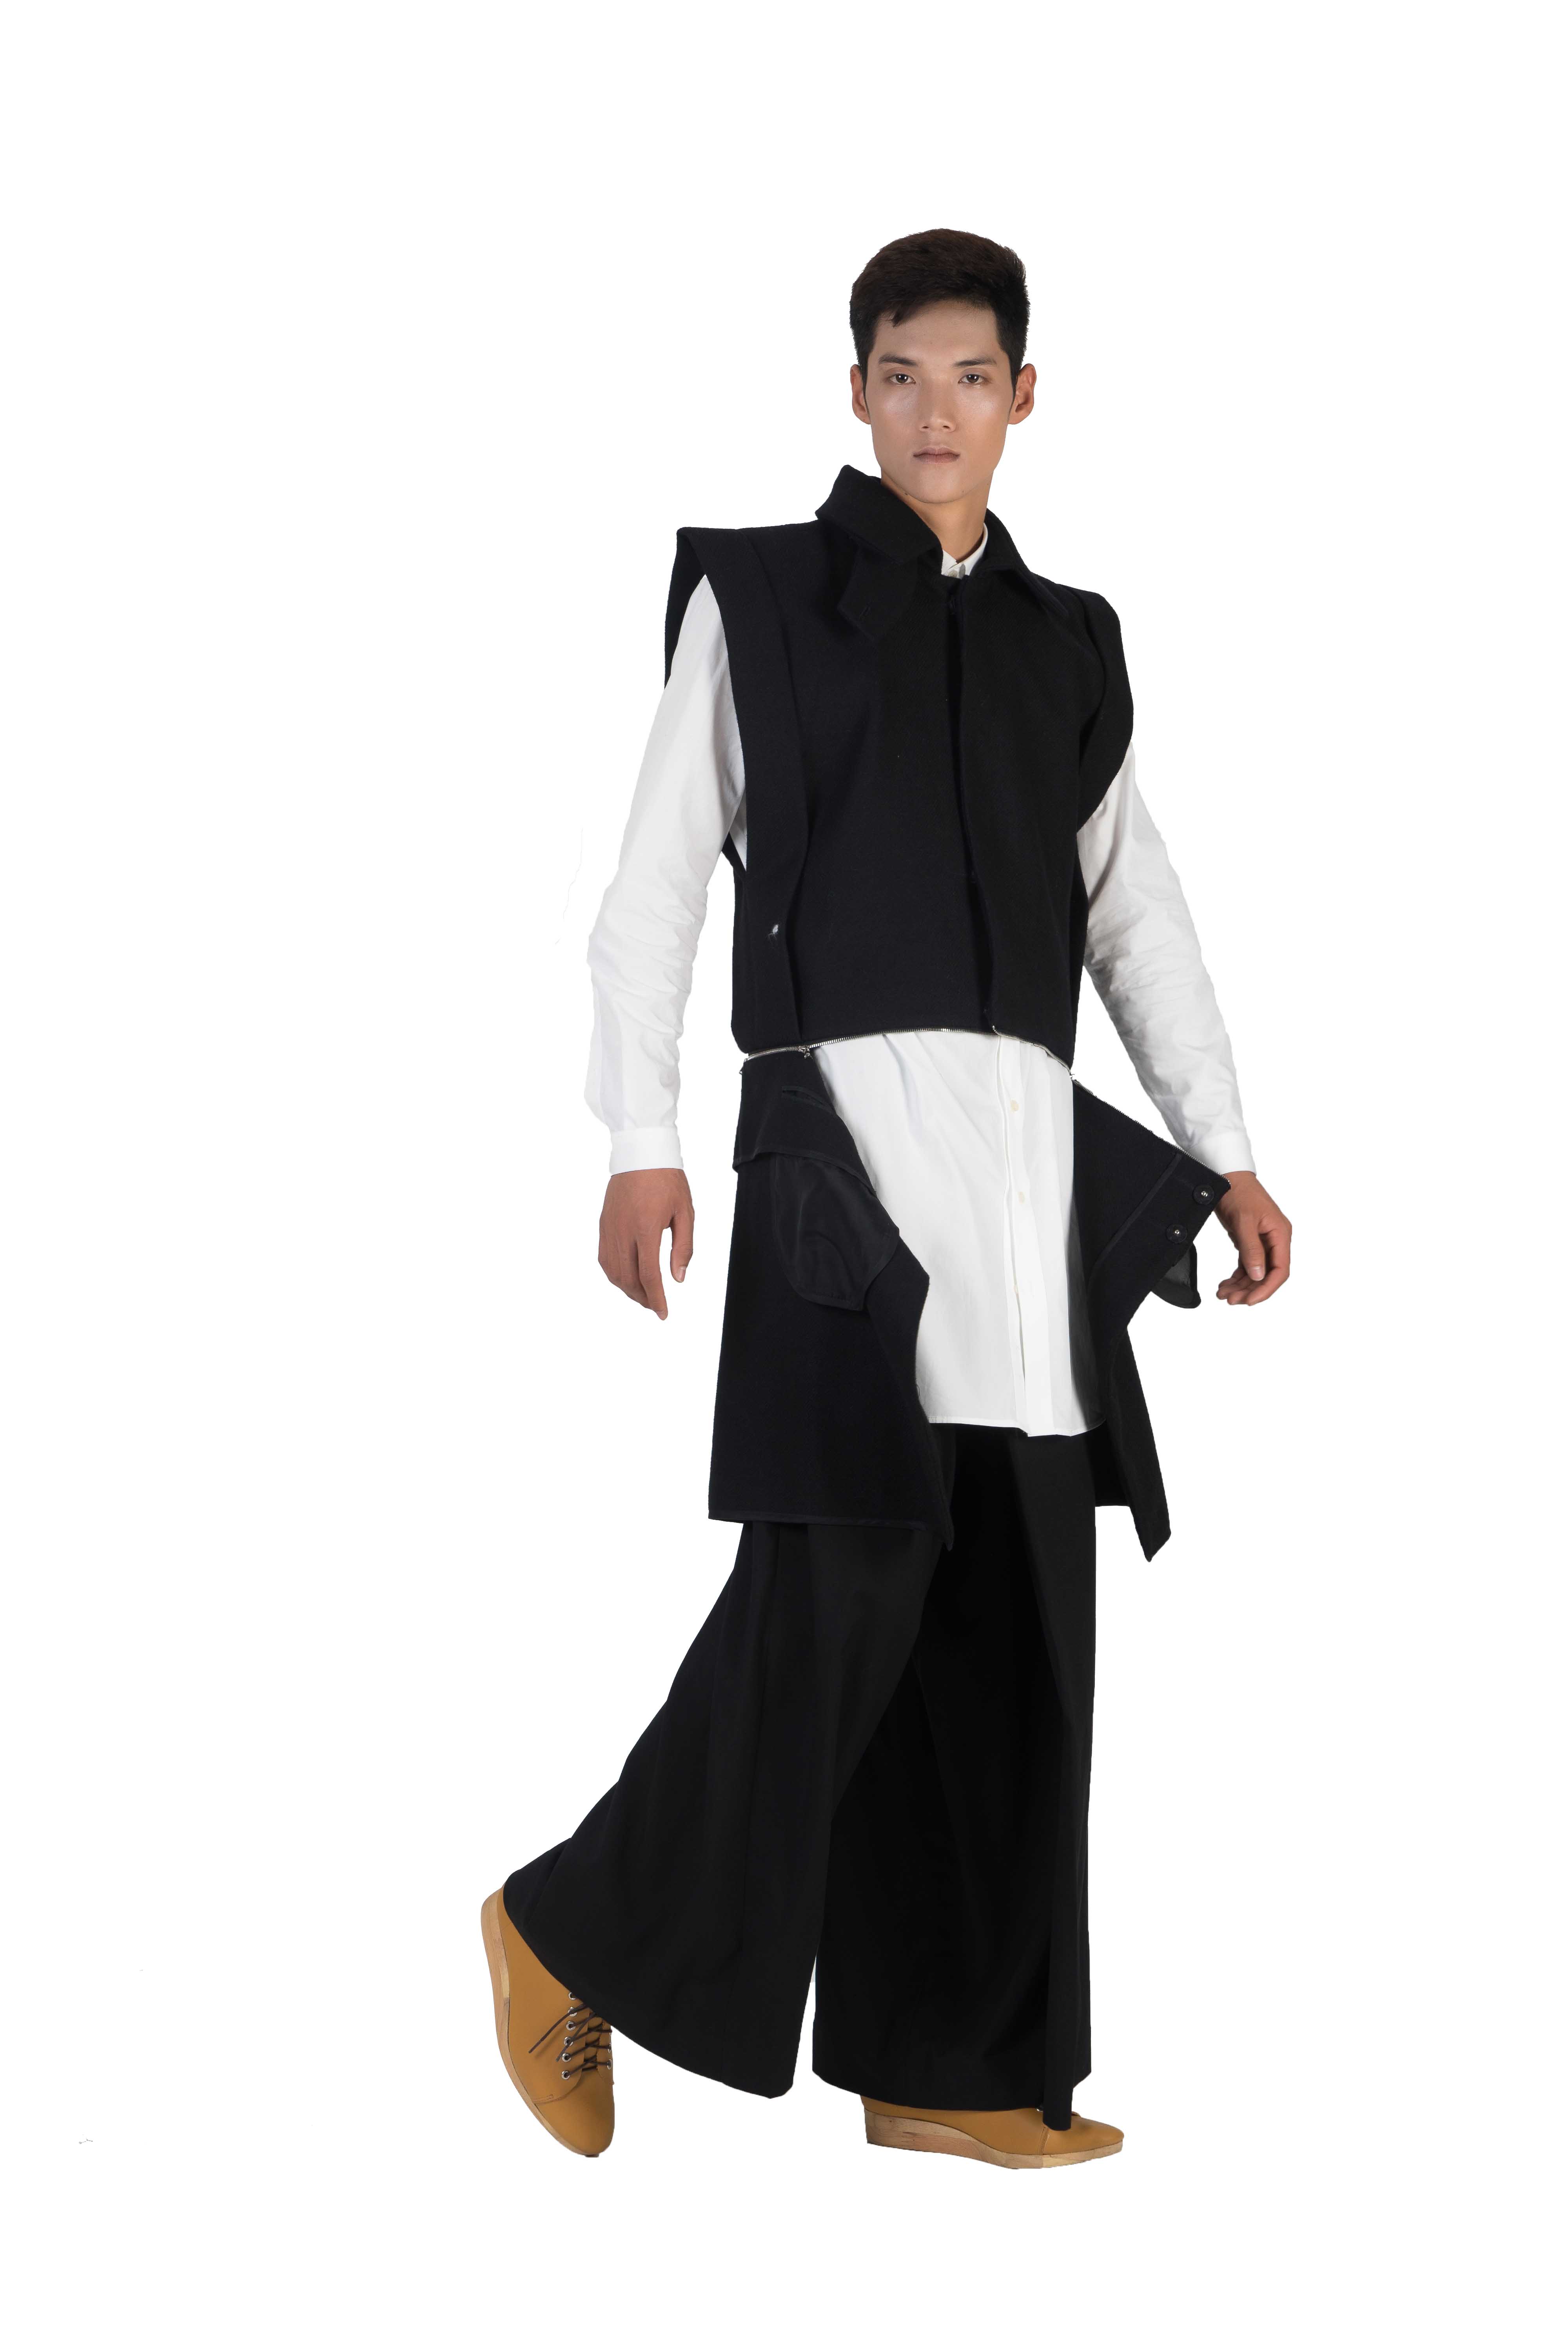 Knee length sleeveless samourai style jacket